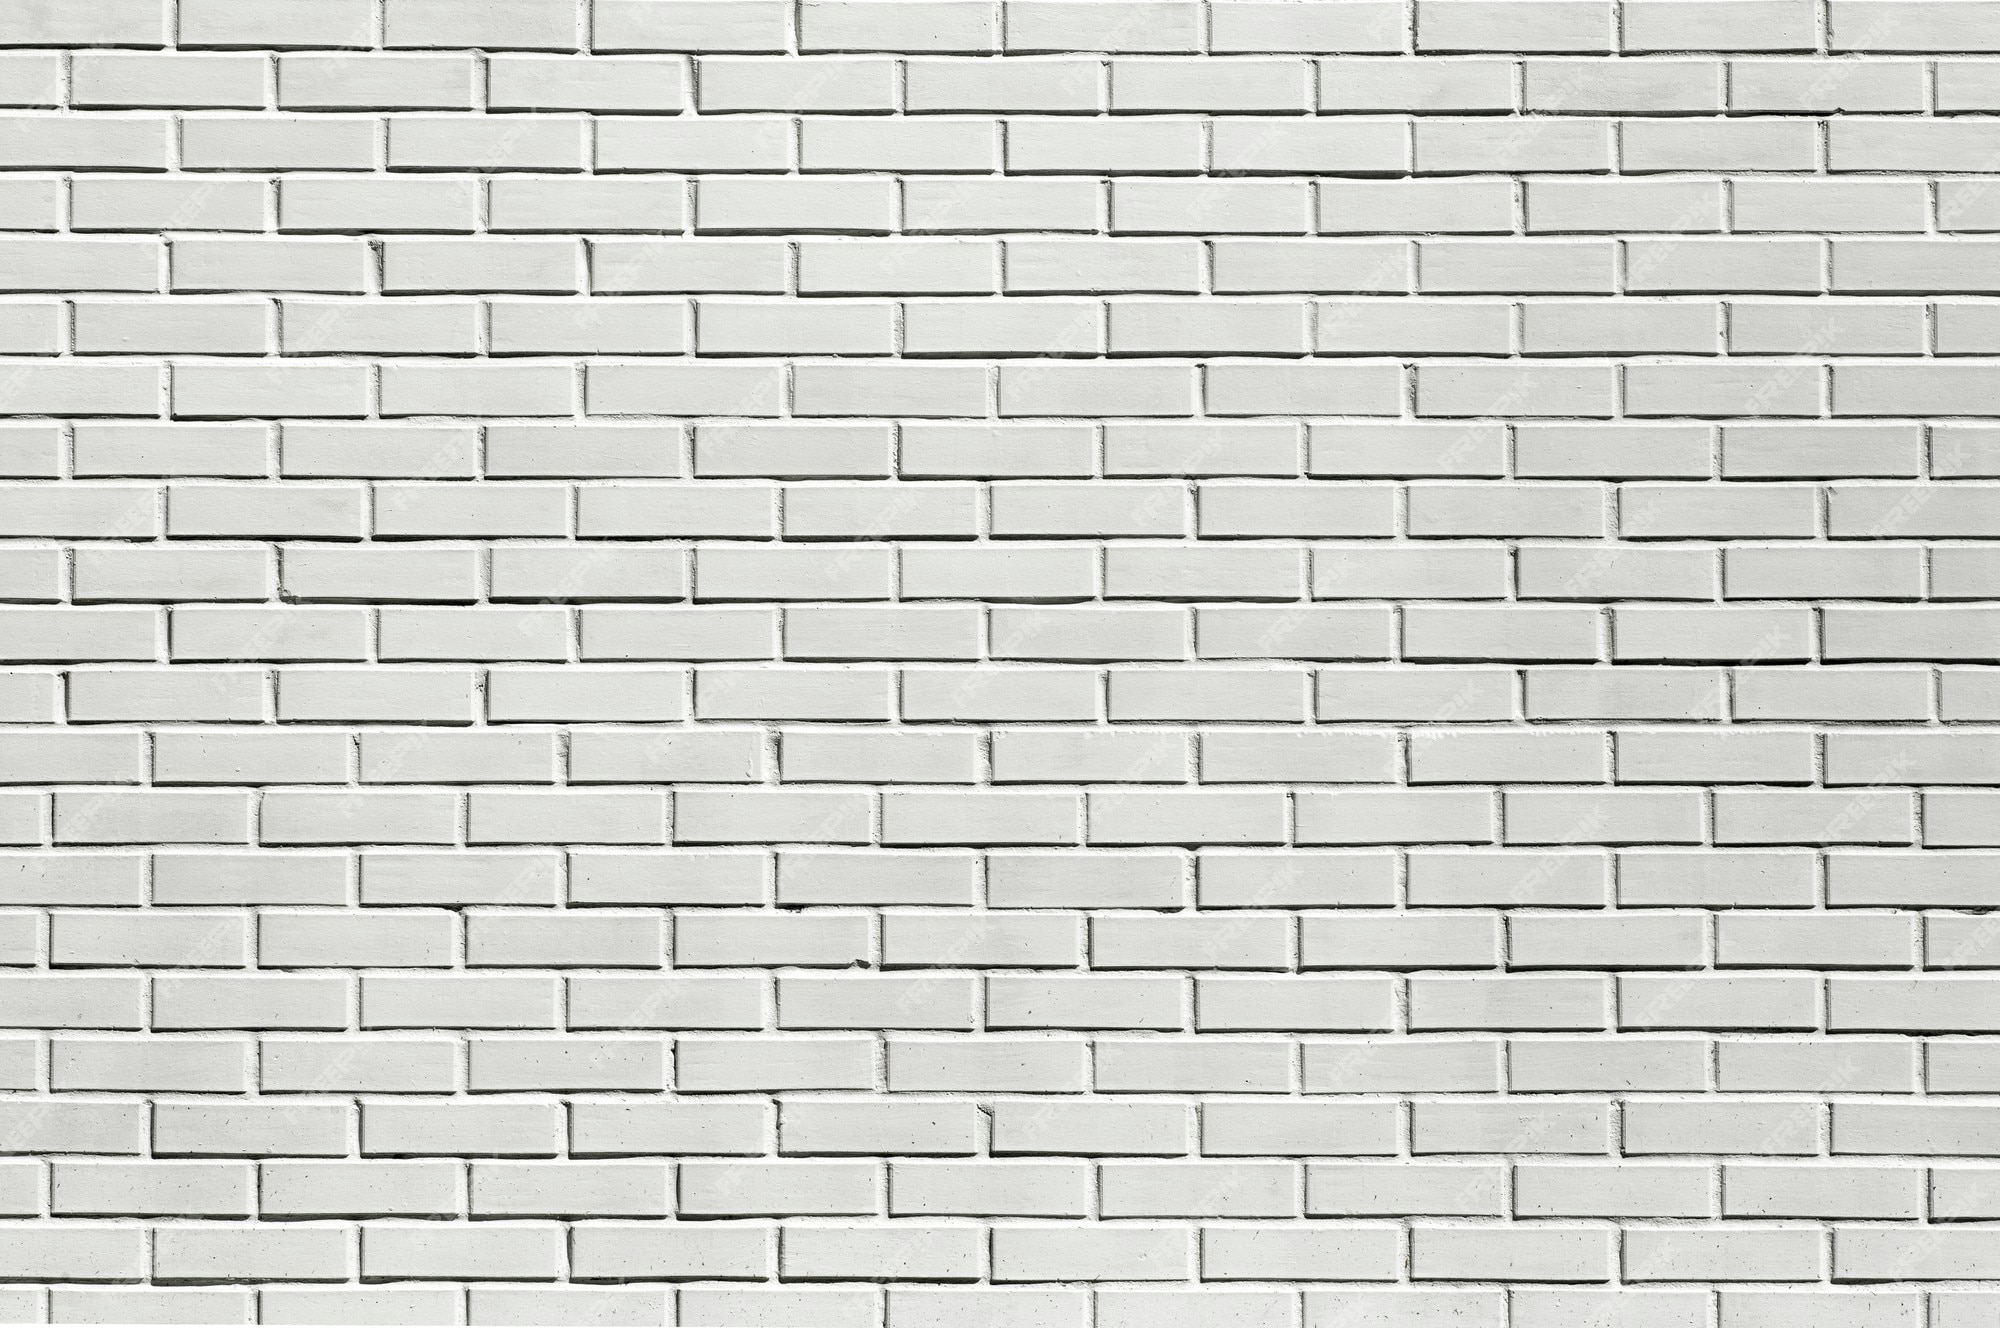 Premium Photo | Brick white wall background. white stone brickwork. high  quality photo